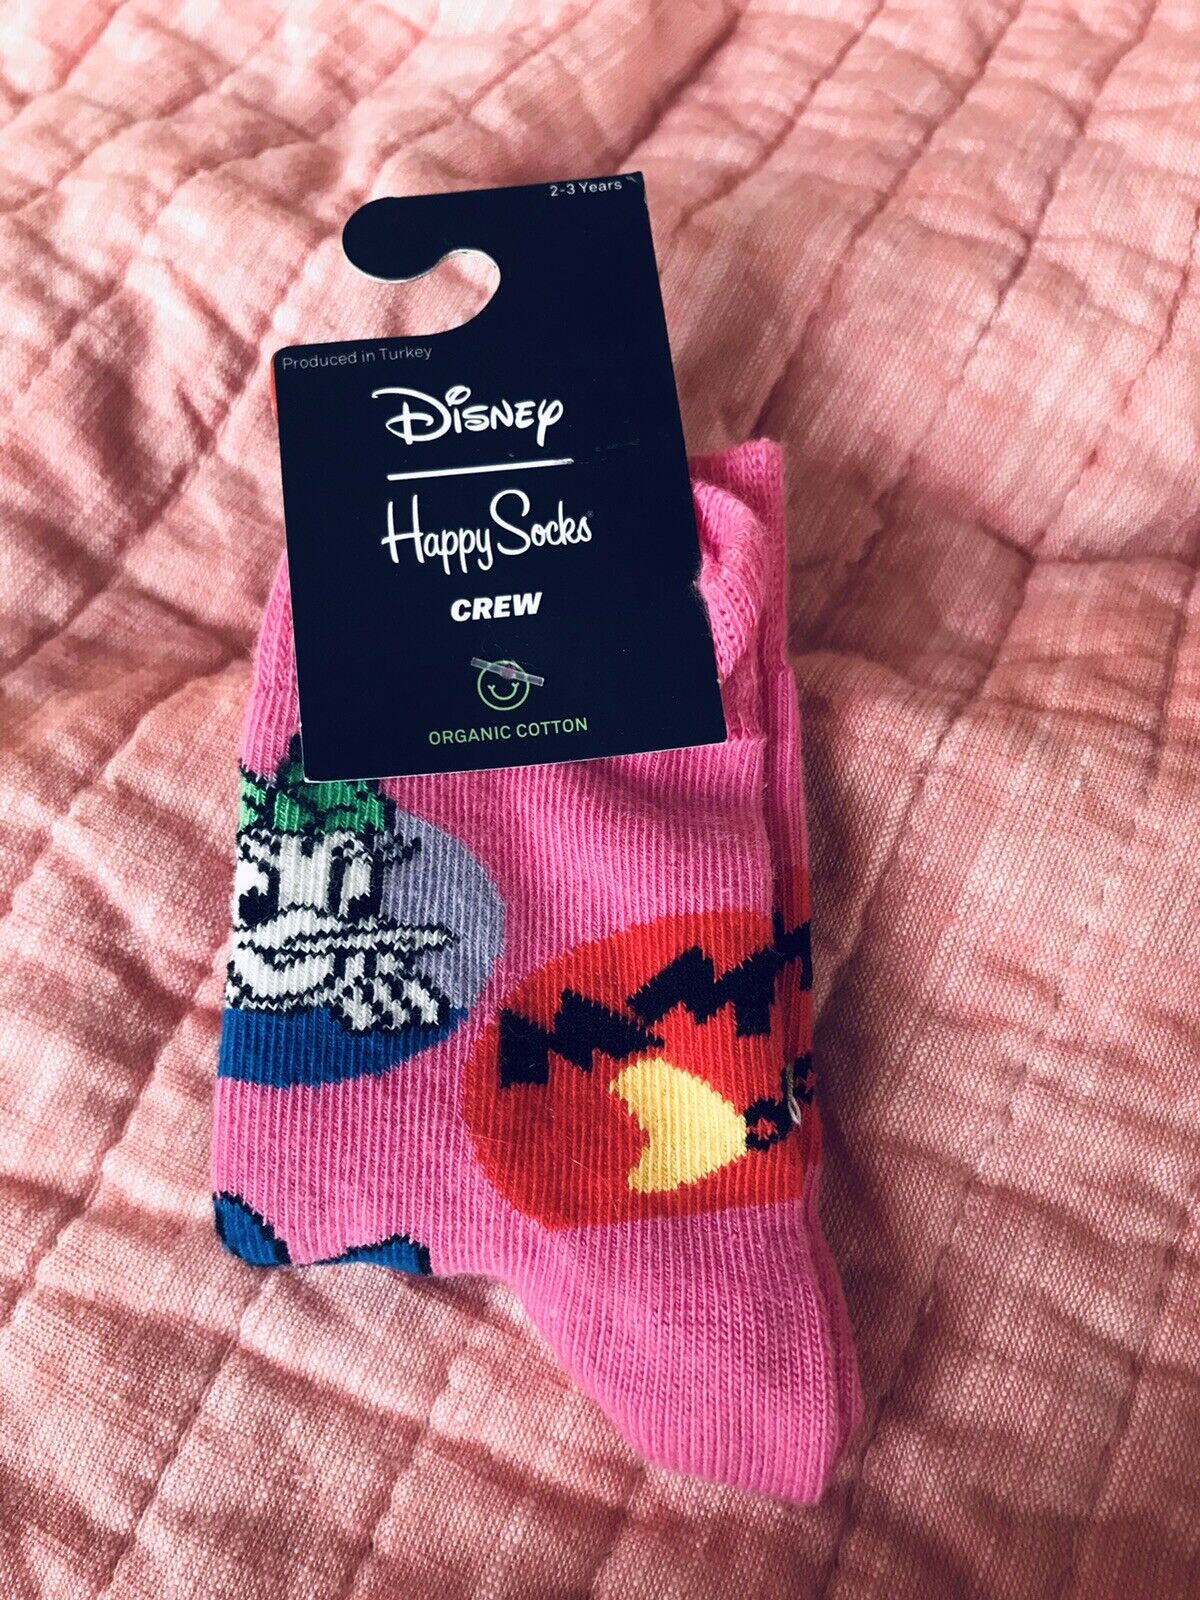 Disney Kids Happy Socks Daisy Minnie Mouse Pink Crew Size 2-3 Years-nwt!